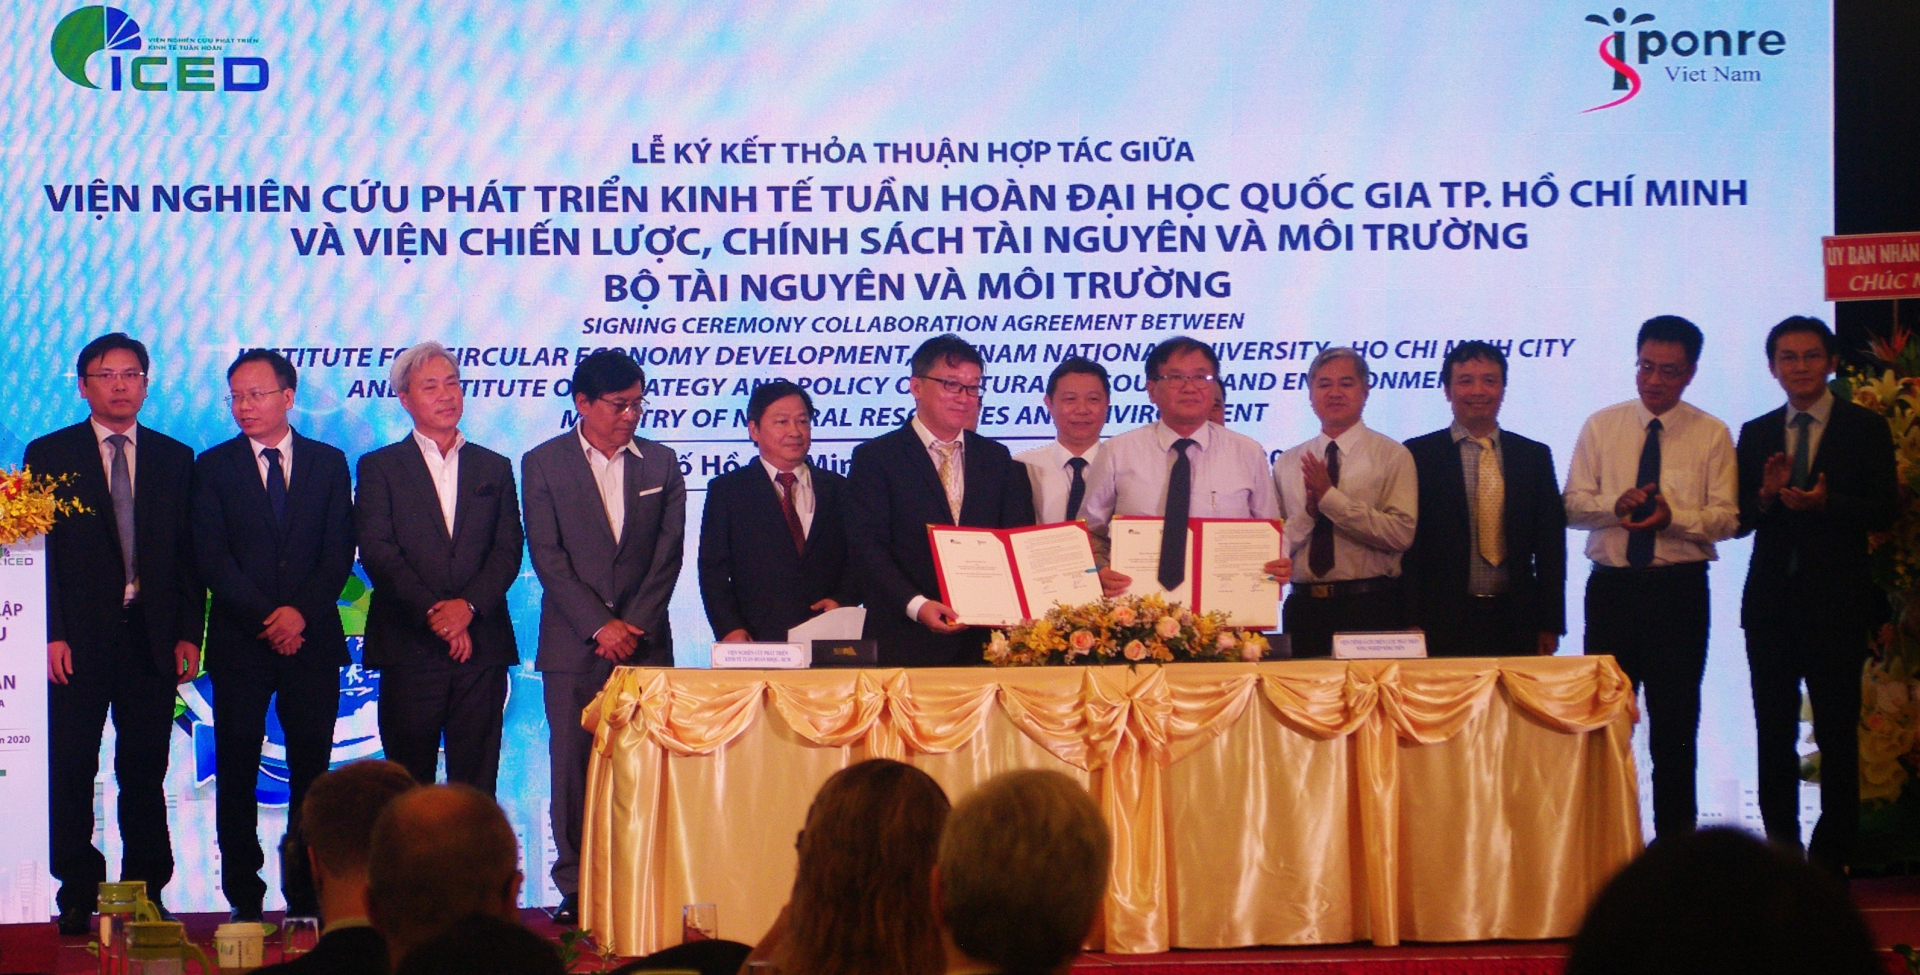 first institute of circular economy development established in vietnam